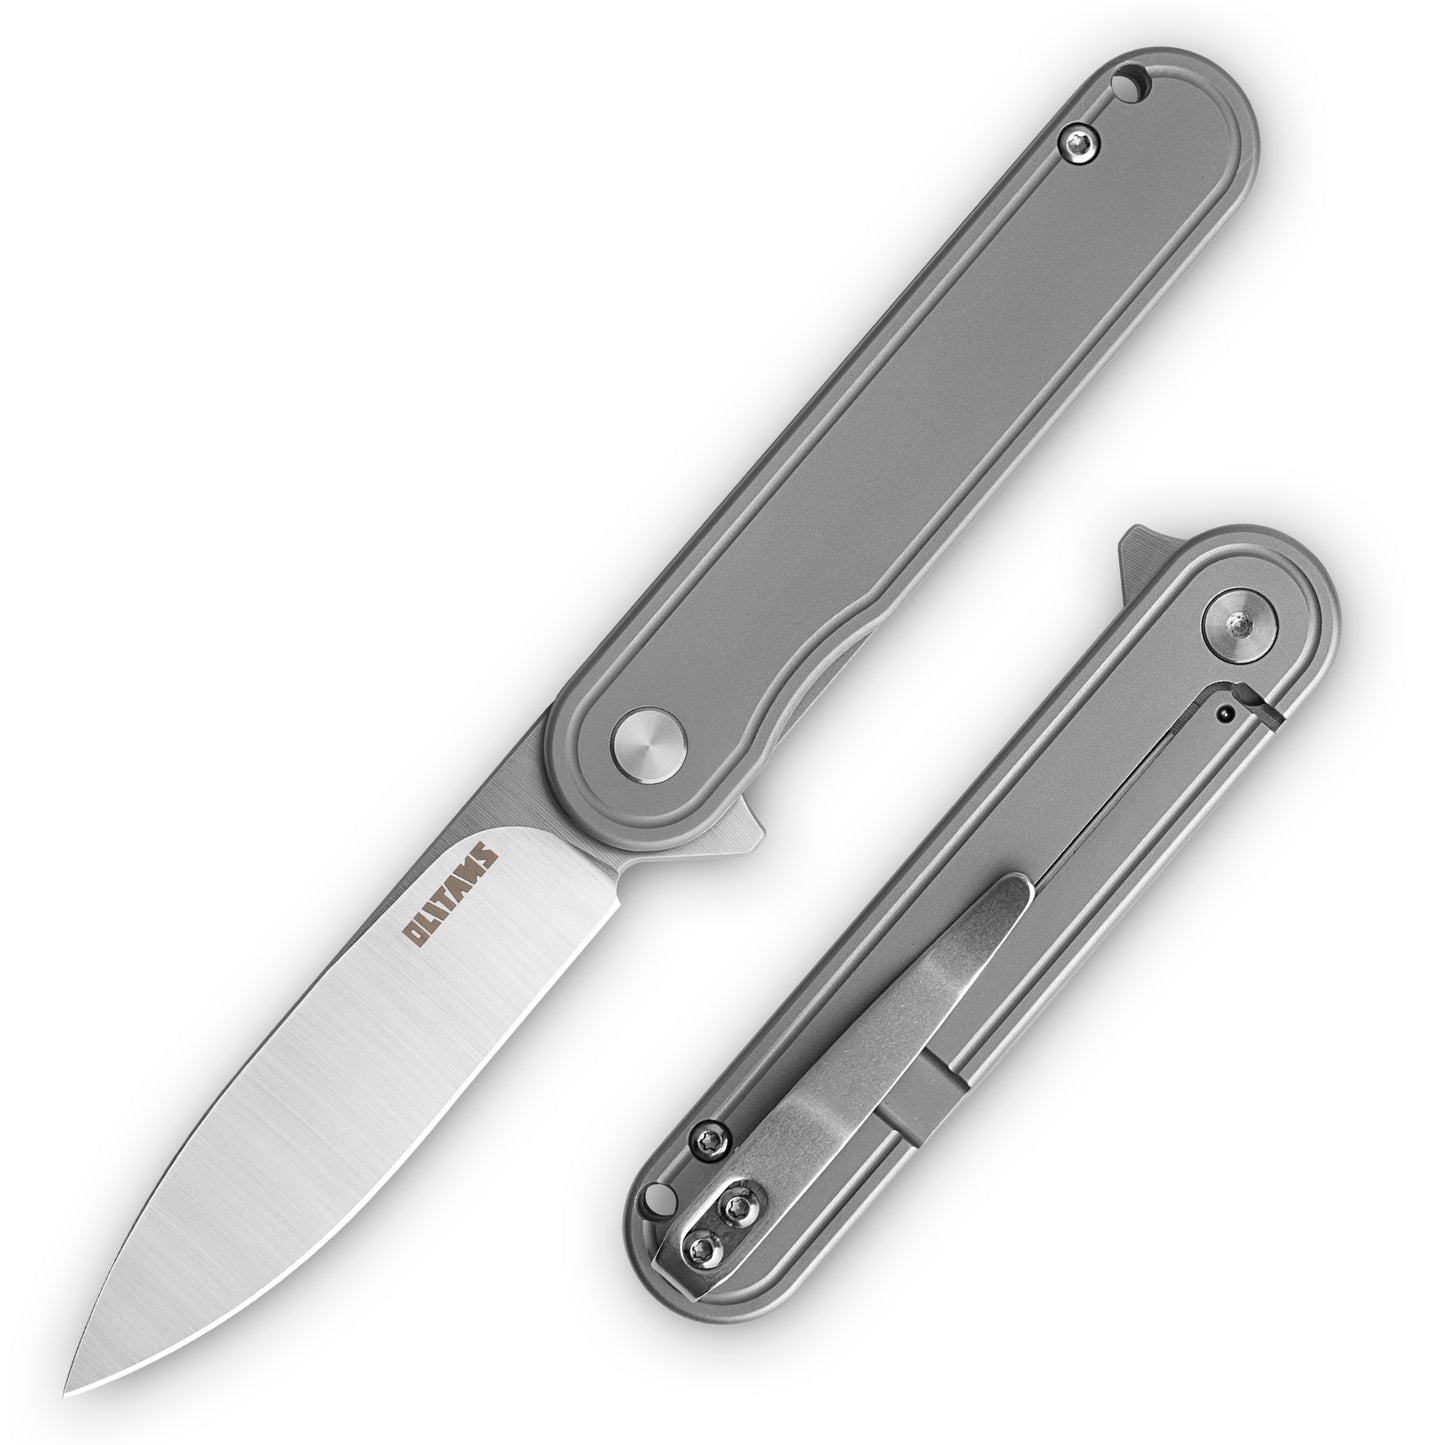 OLITANS T025 Pocket Knife 2.76'' D2 Steel Blade 3.6'' Titanium Alloy Handle Flipper Mini Folding knife 1.8oz